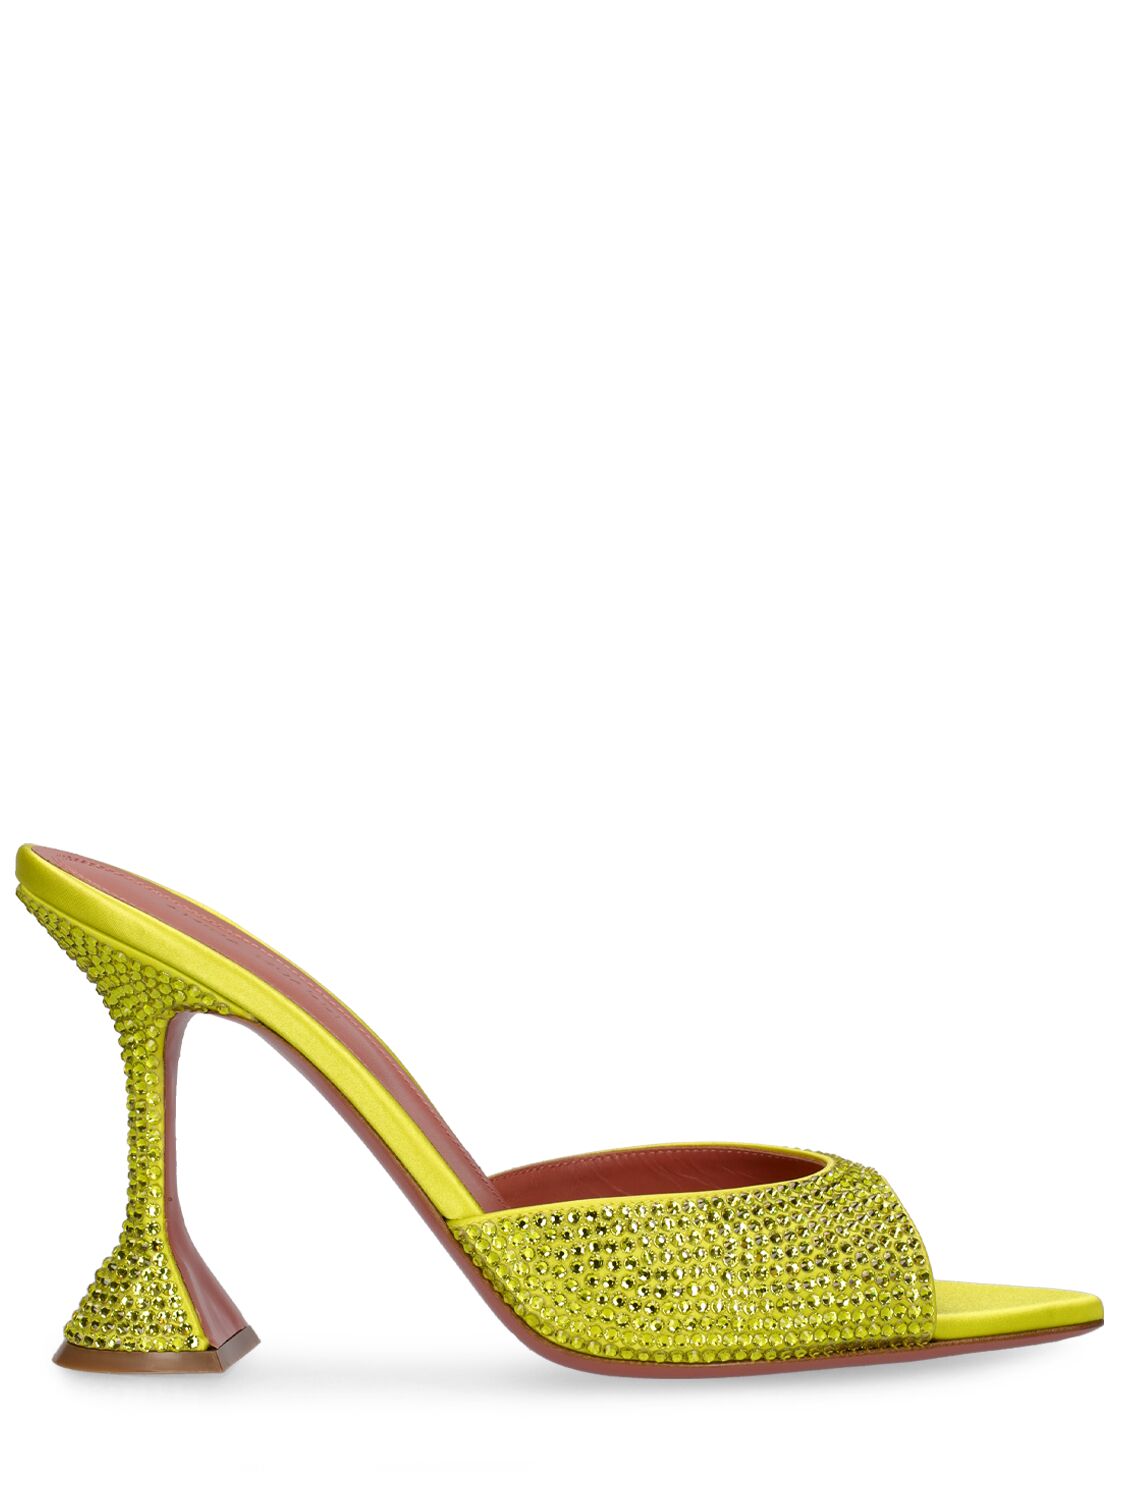 Amina Muaddi 95mm Carolin Crystal Embellished Sandals In Yellow